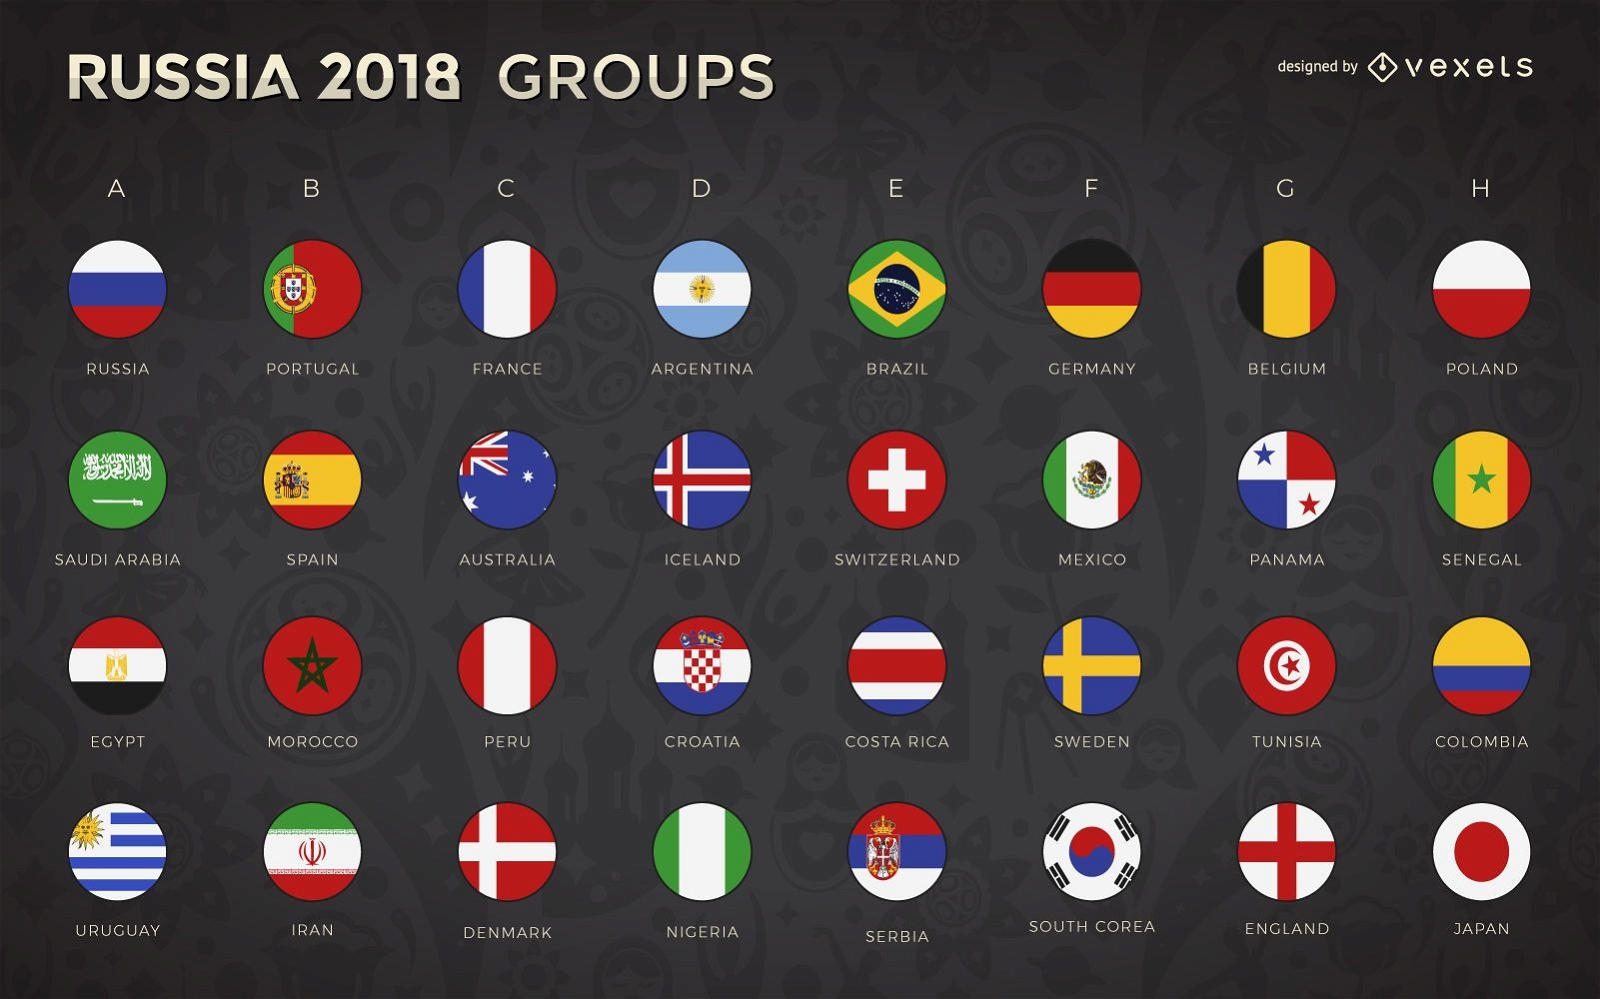 Copa do Mundo da Fifa 2018  World cup, World cup russia 2018, Brazil world  cup